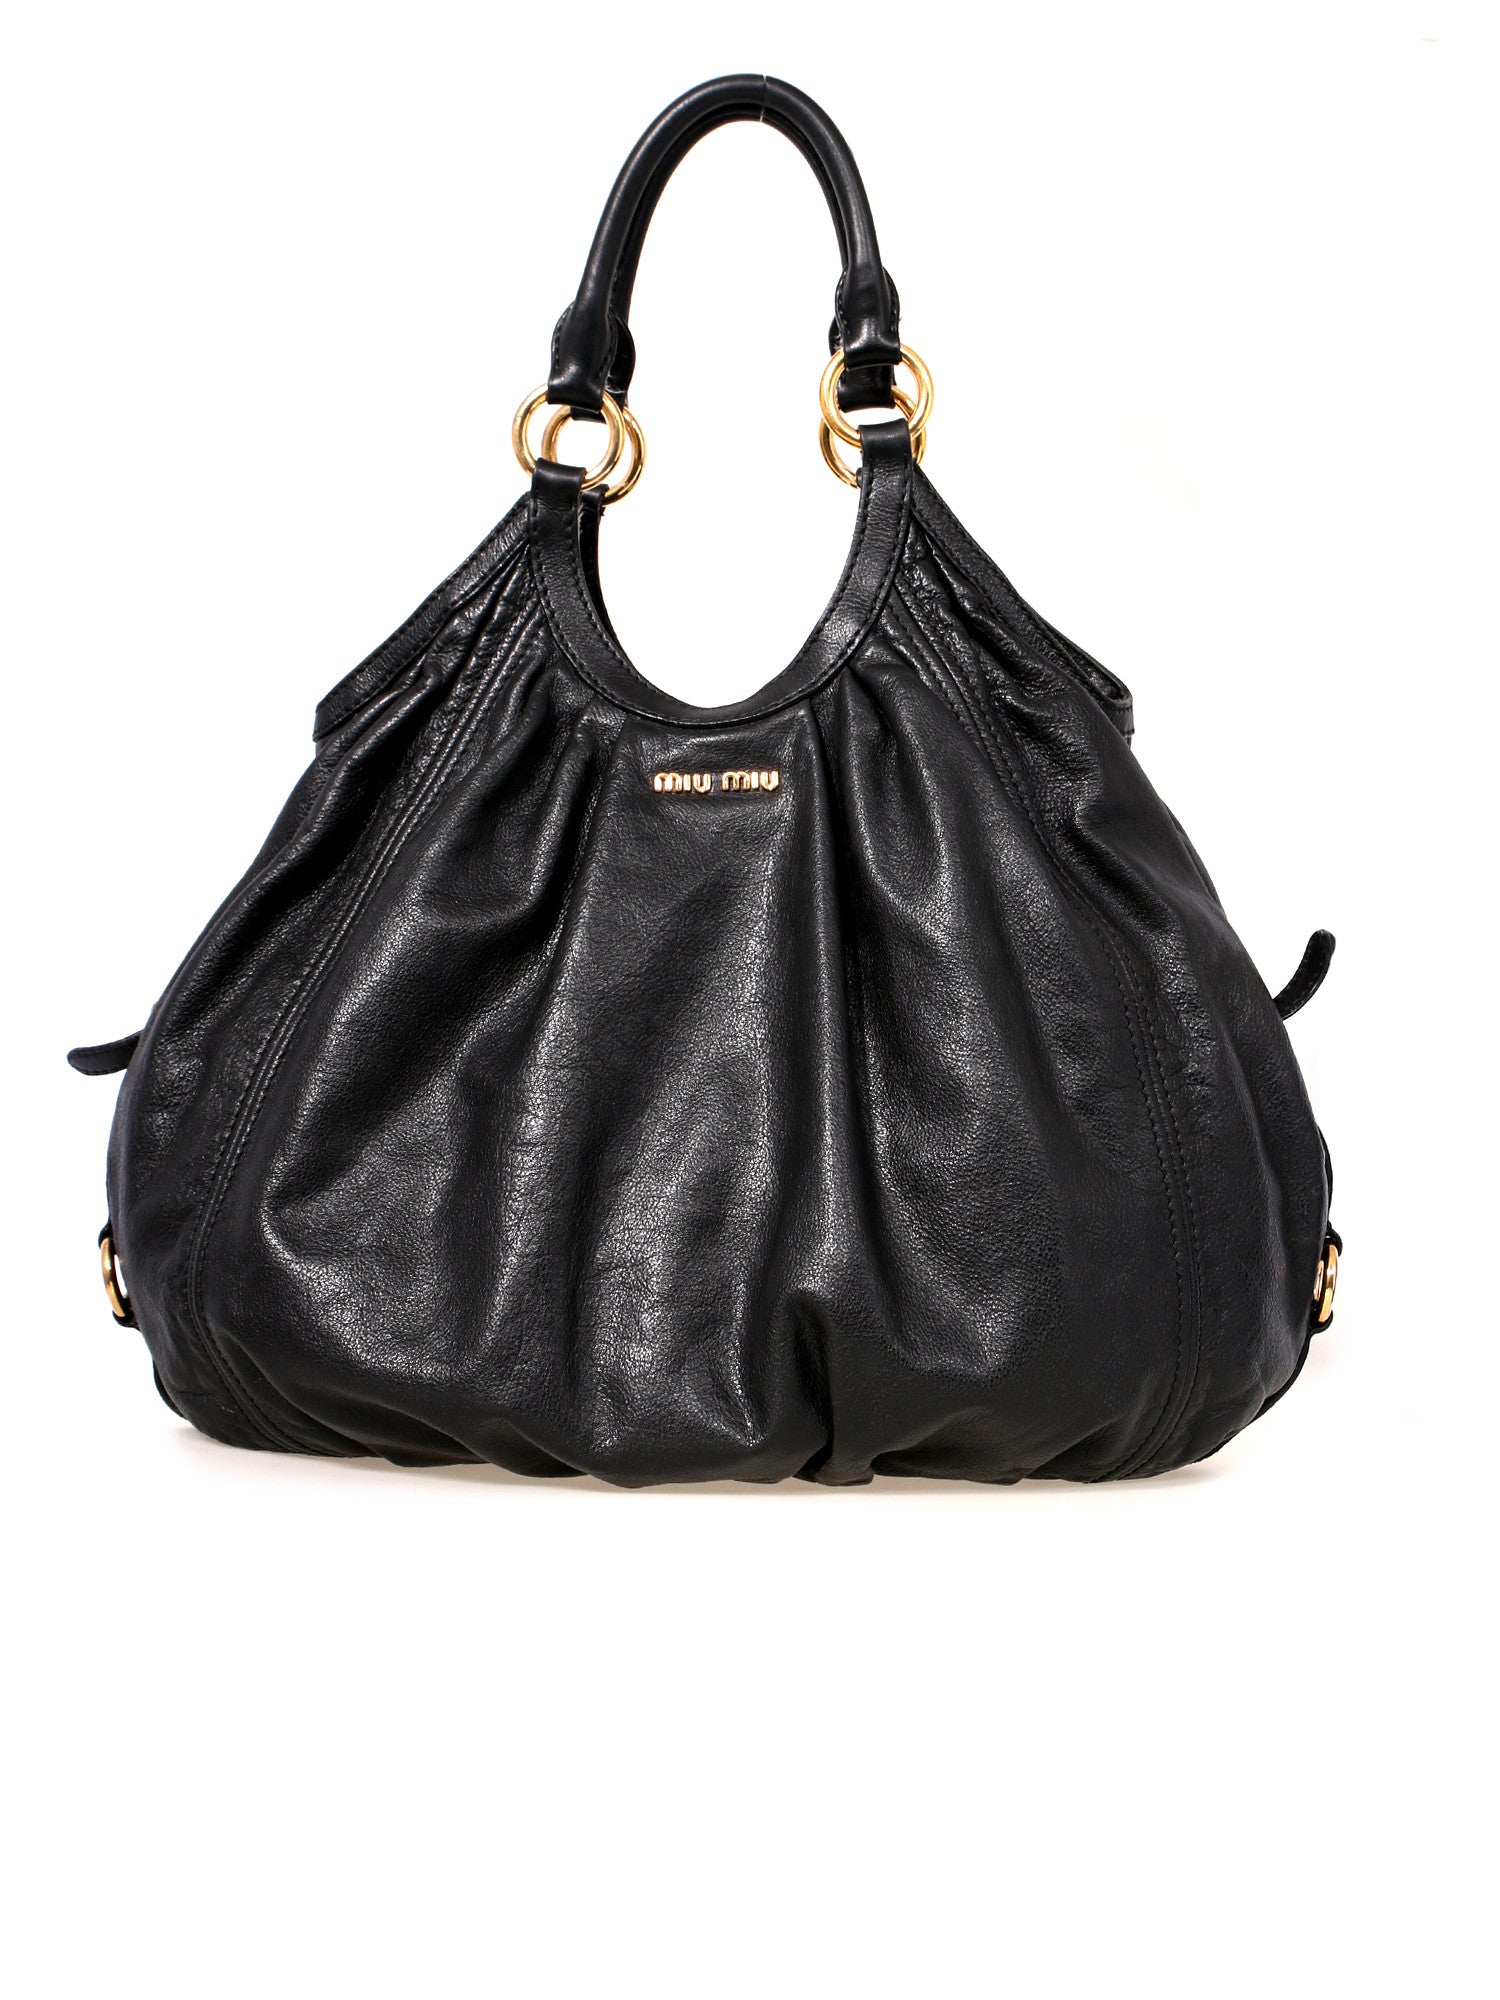 MIU MIU leather one shoulder bag-